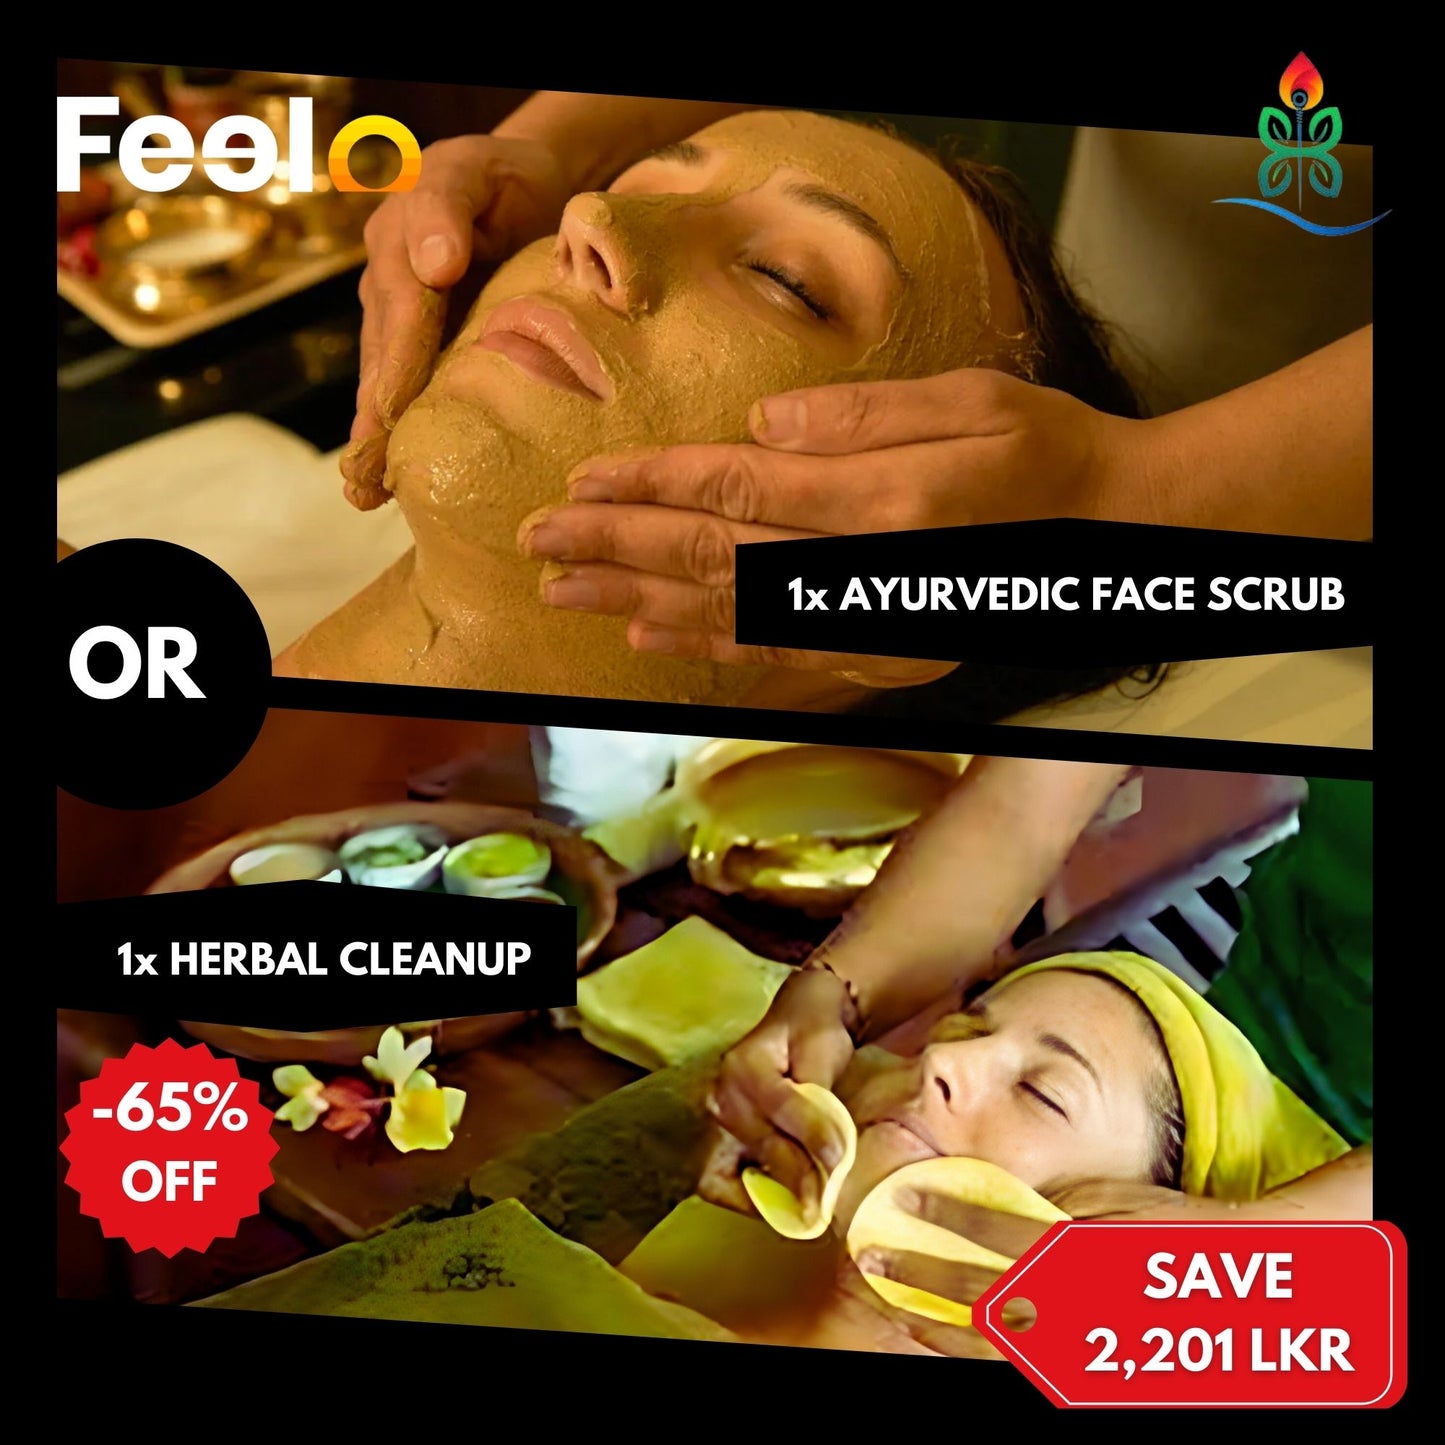 1x Herbal Cleanup or Ayurvedic Face Scrub